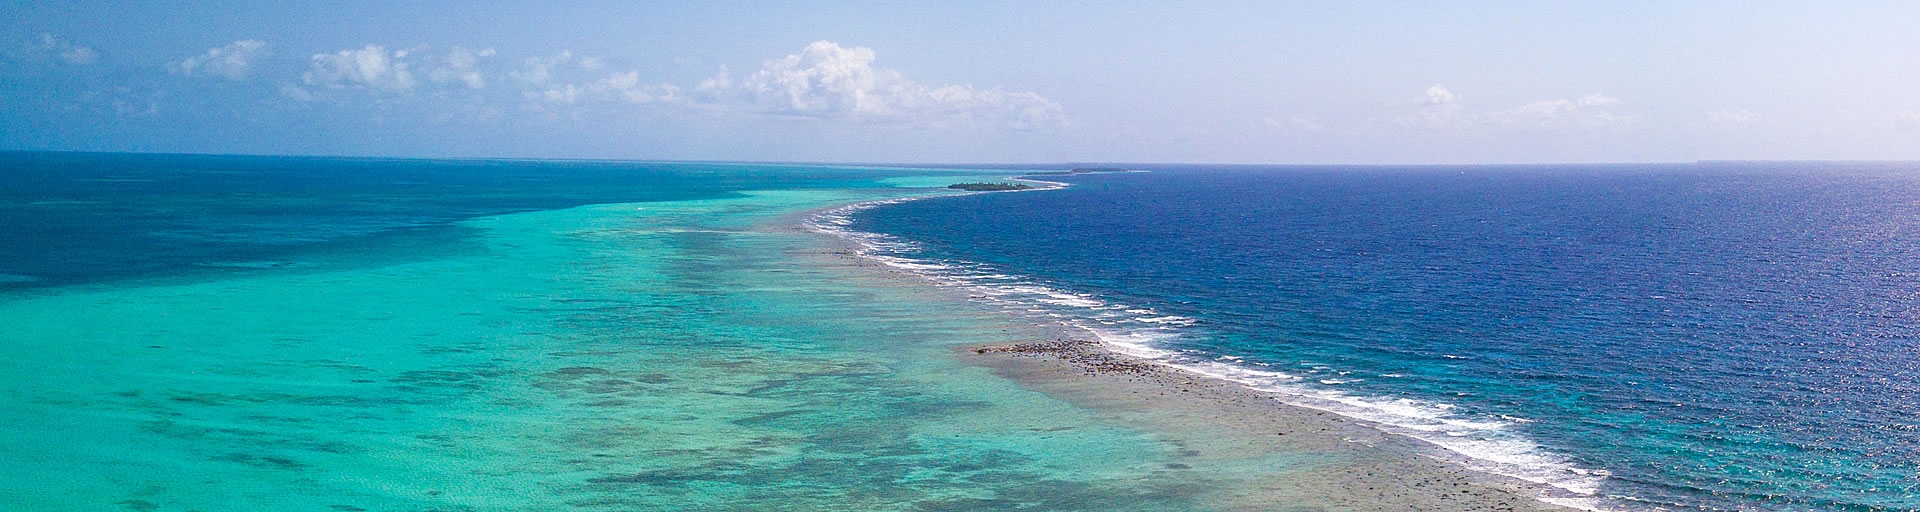 belize barrier reef